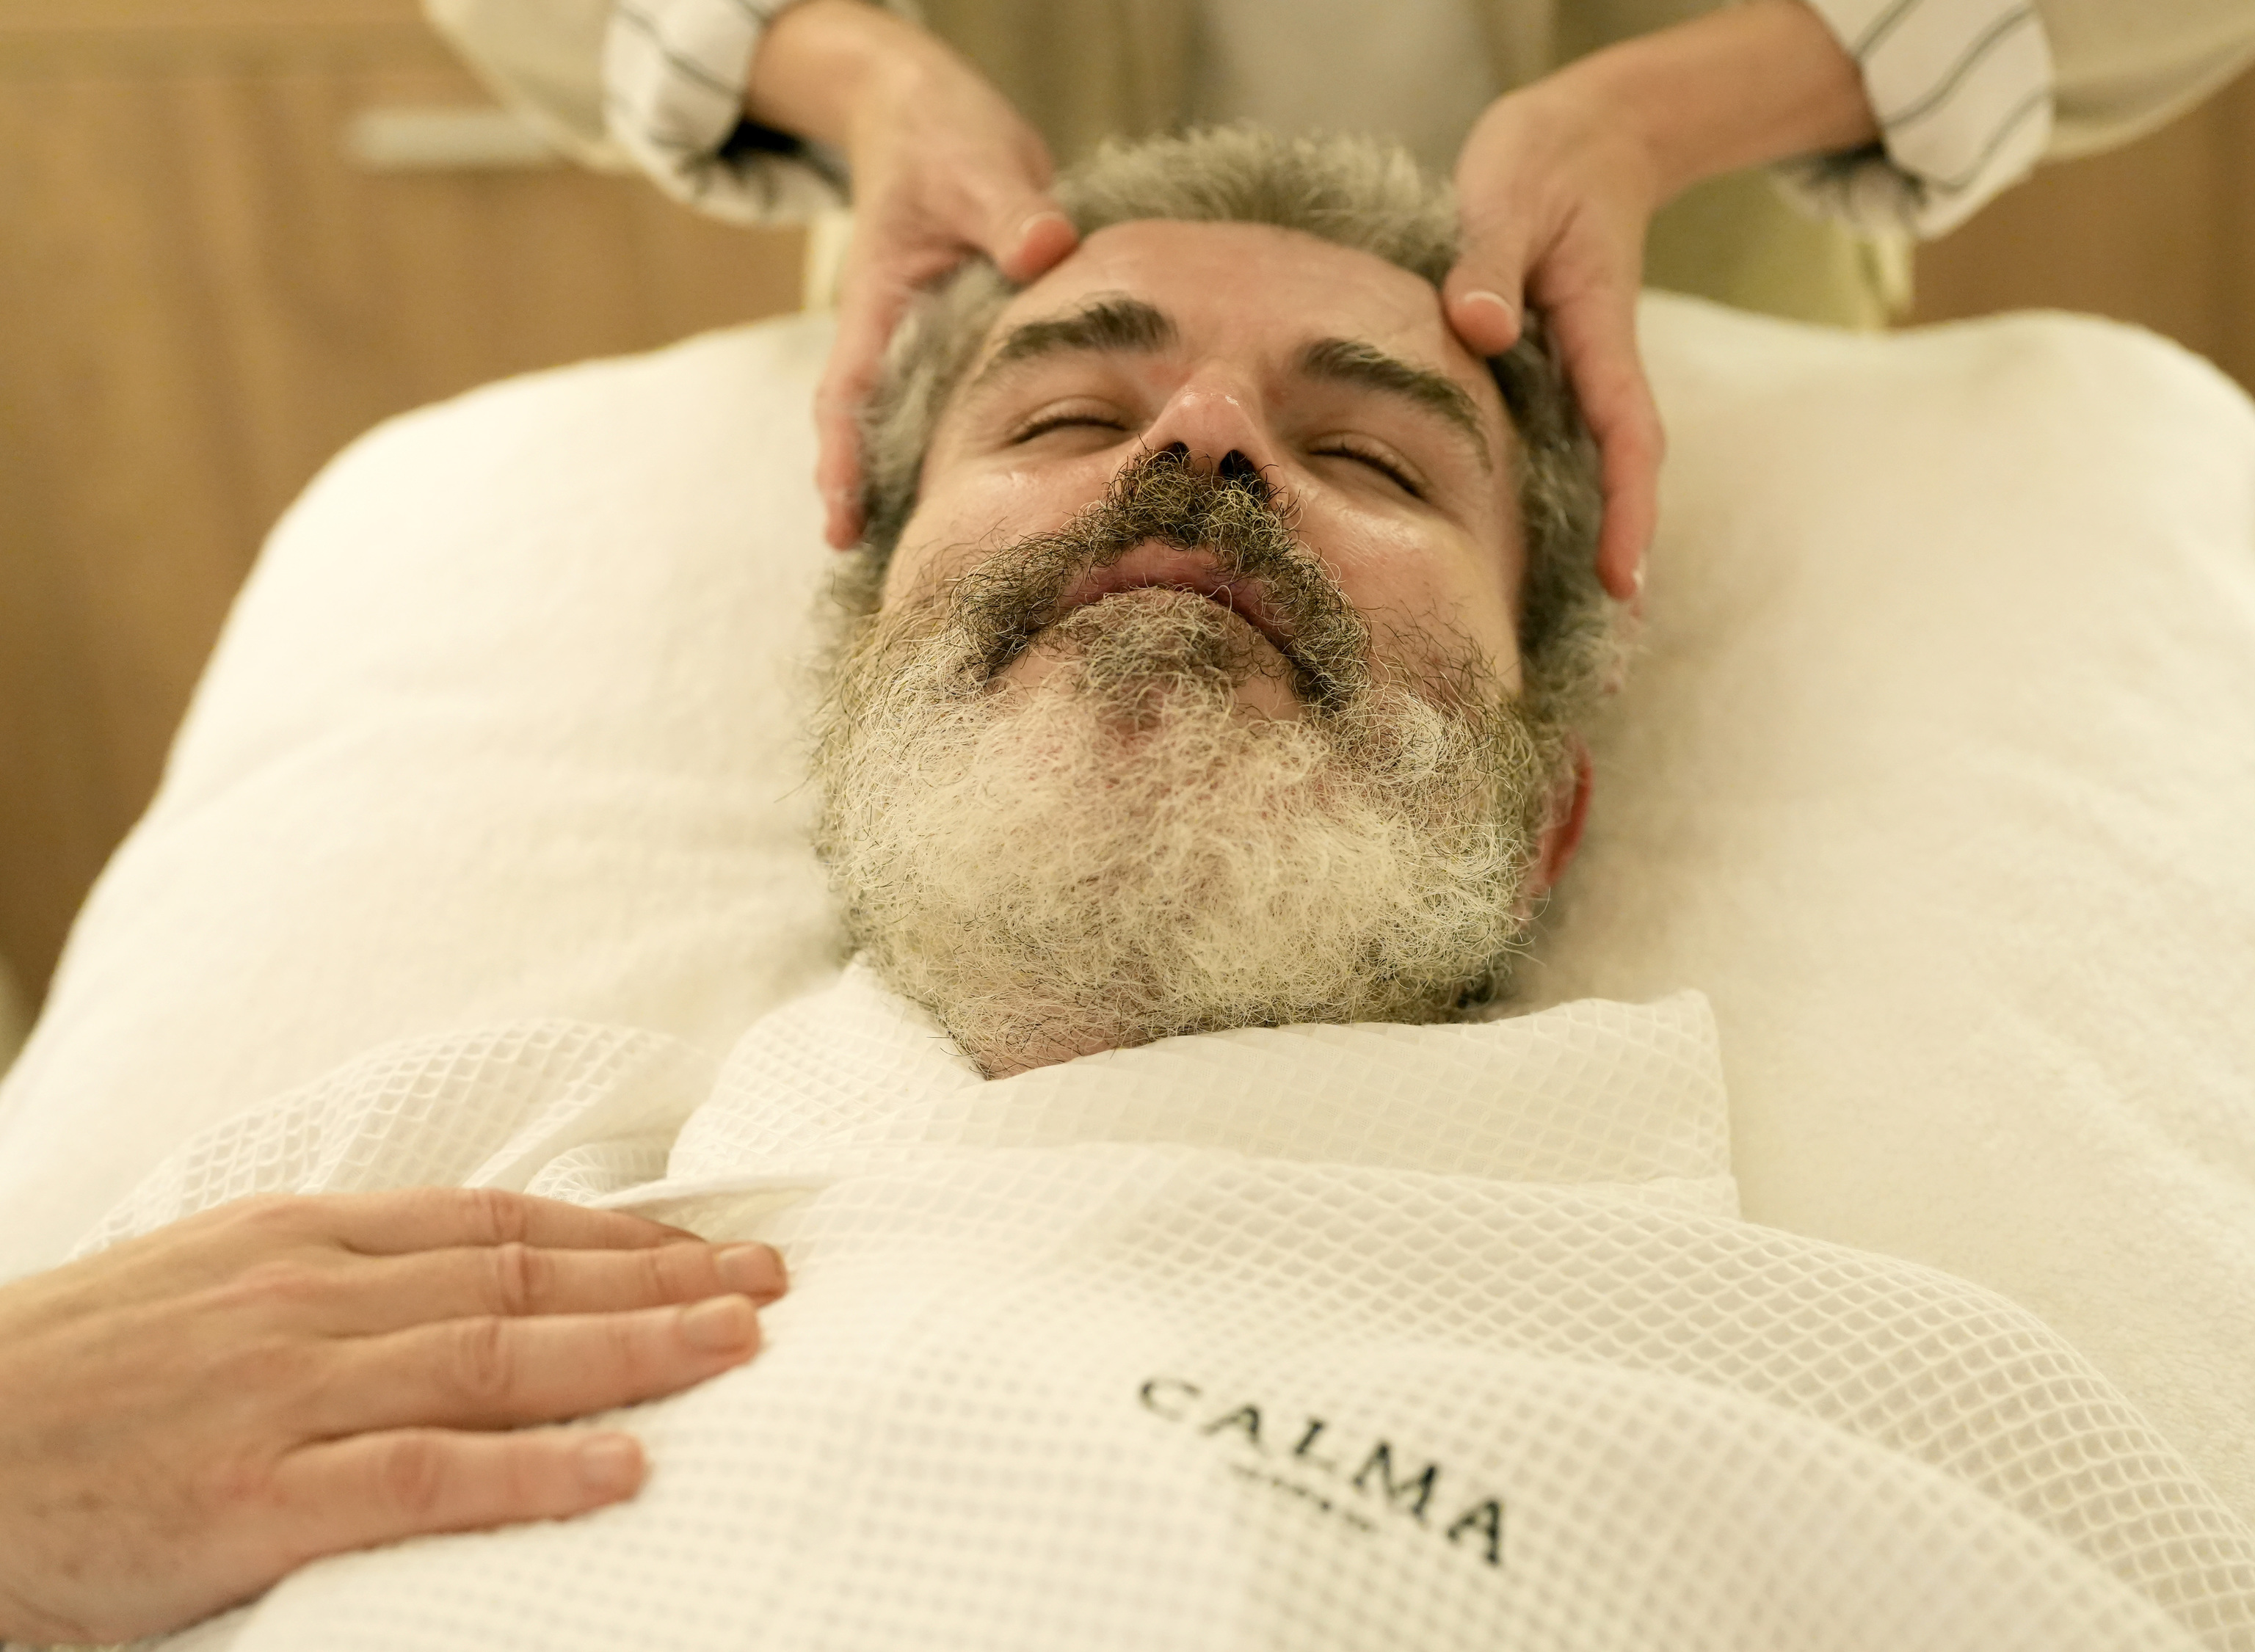 Lorenzo Caprile, en Calma Madrid dndose un masaje.